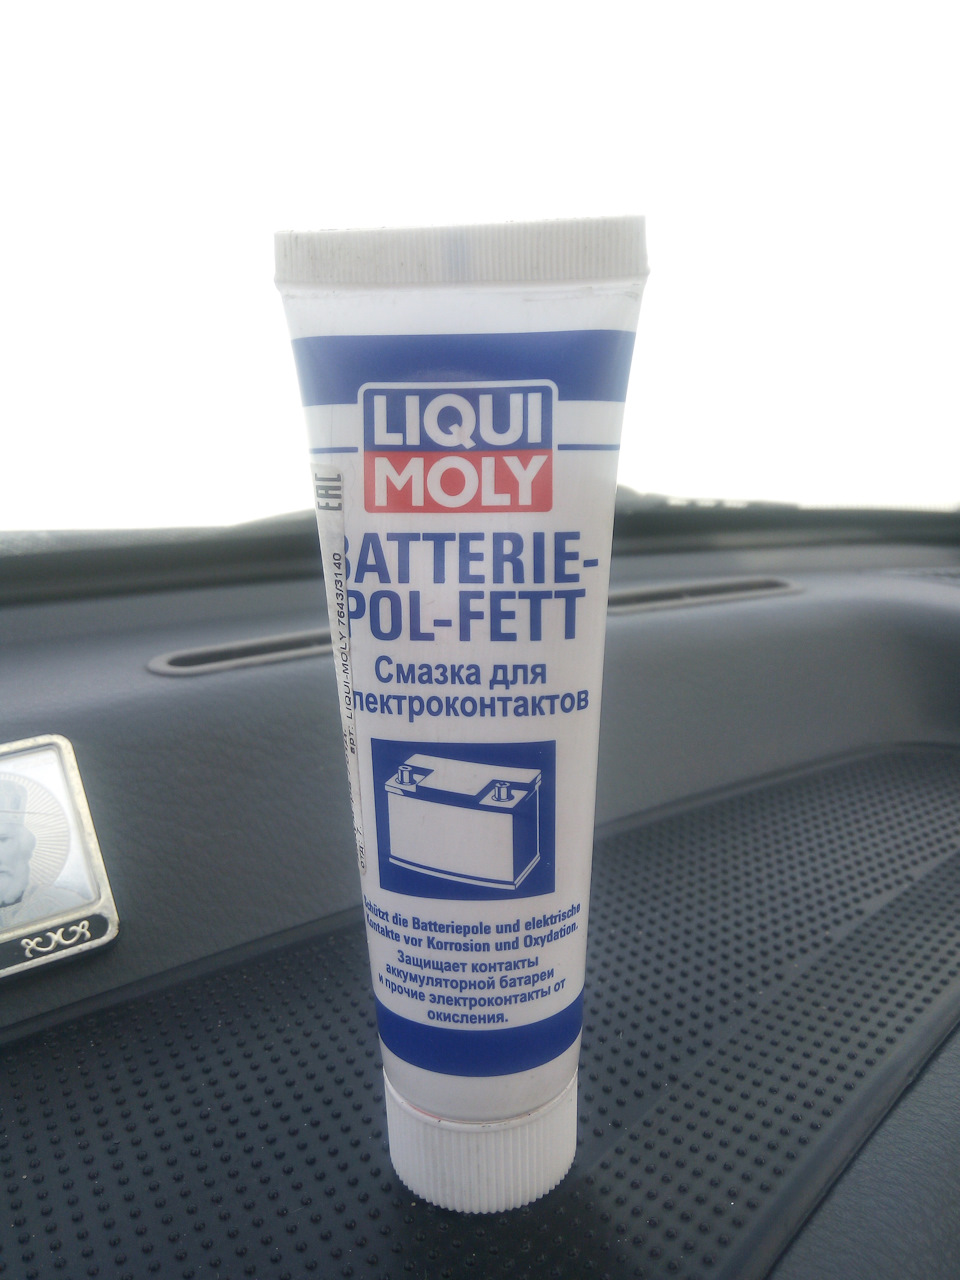 Liqui Moly Batterie-Pol-Fett жир для клемм аккумулятора купить в Киеве —  интернет-магазин «BeeBeep»